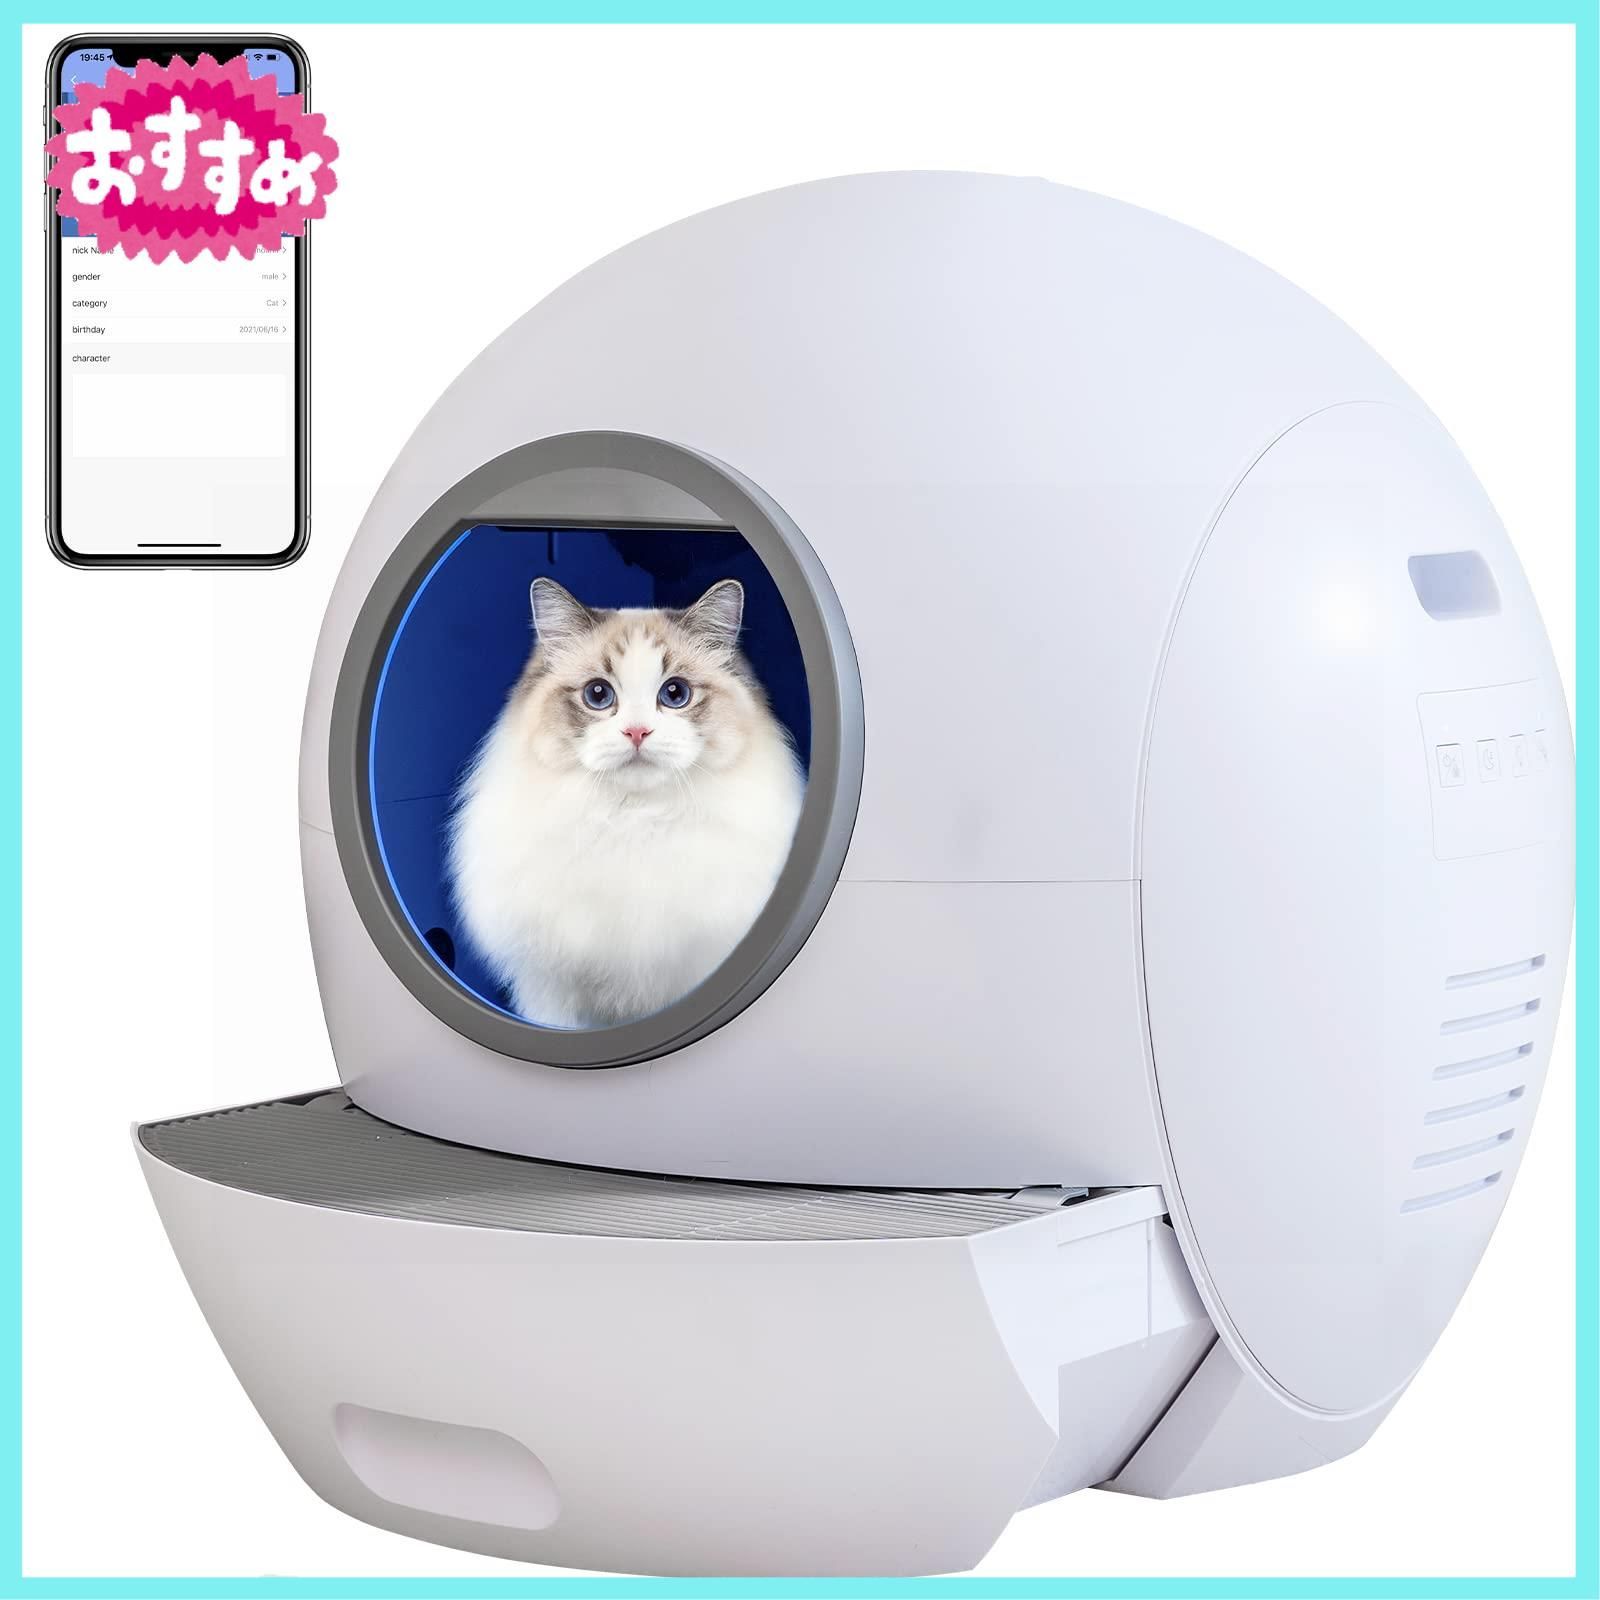 ELS PET猫 トイレ 自動 全自動ネコトイレ 定期自動清掃 センサー付き 飛散防止 スマホ管理 専用APP 日本語説明書付き